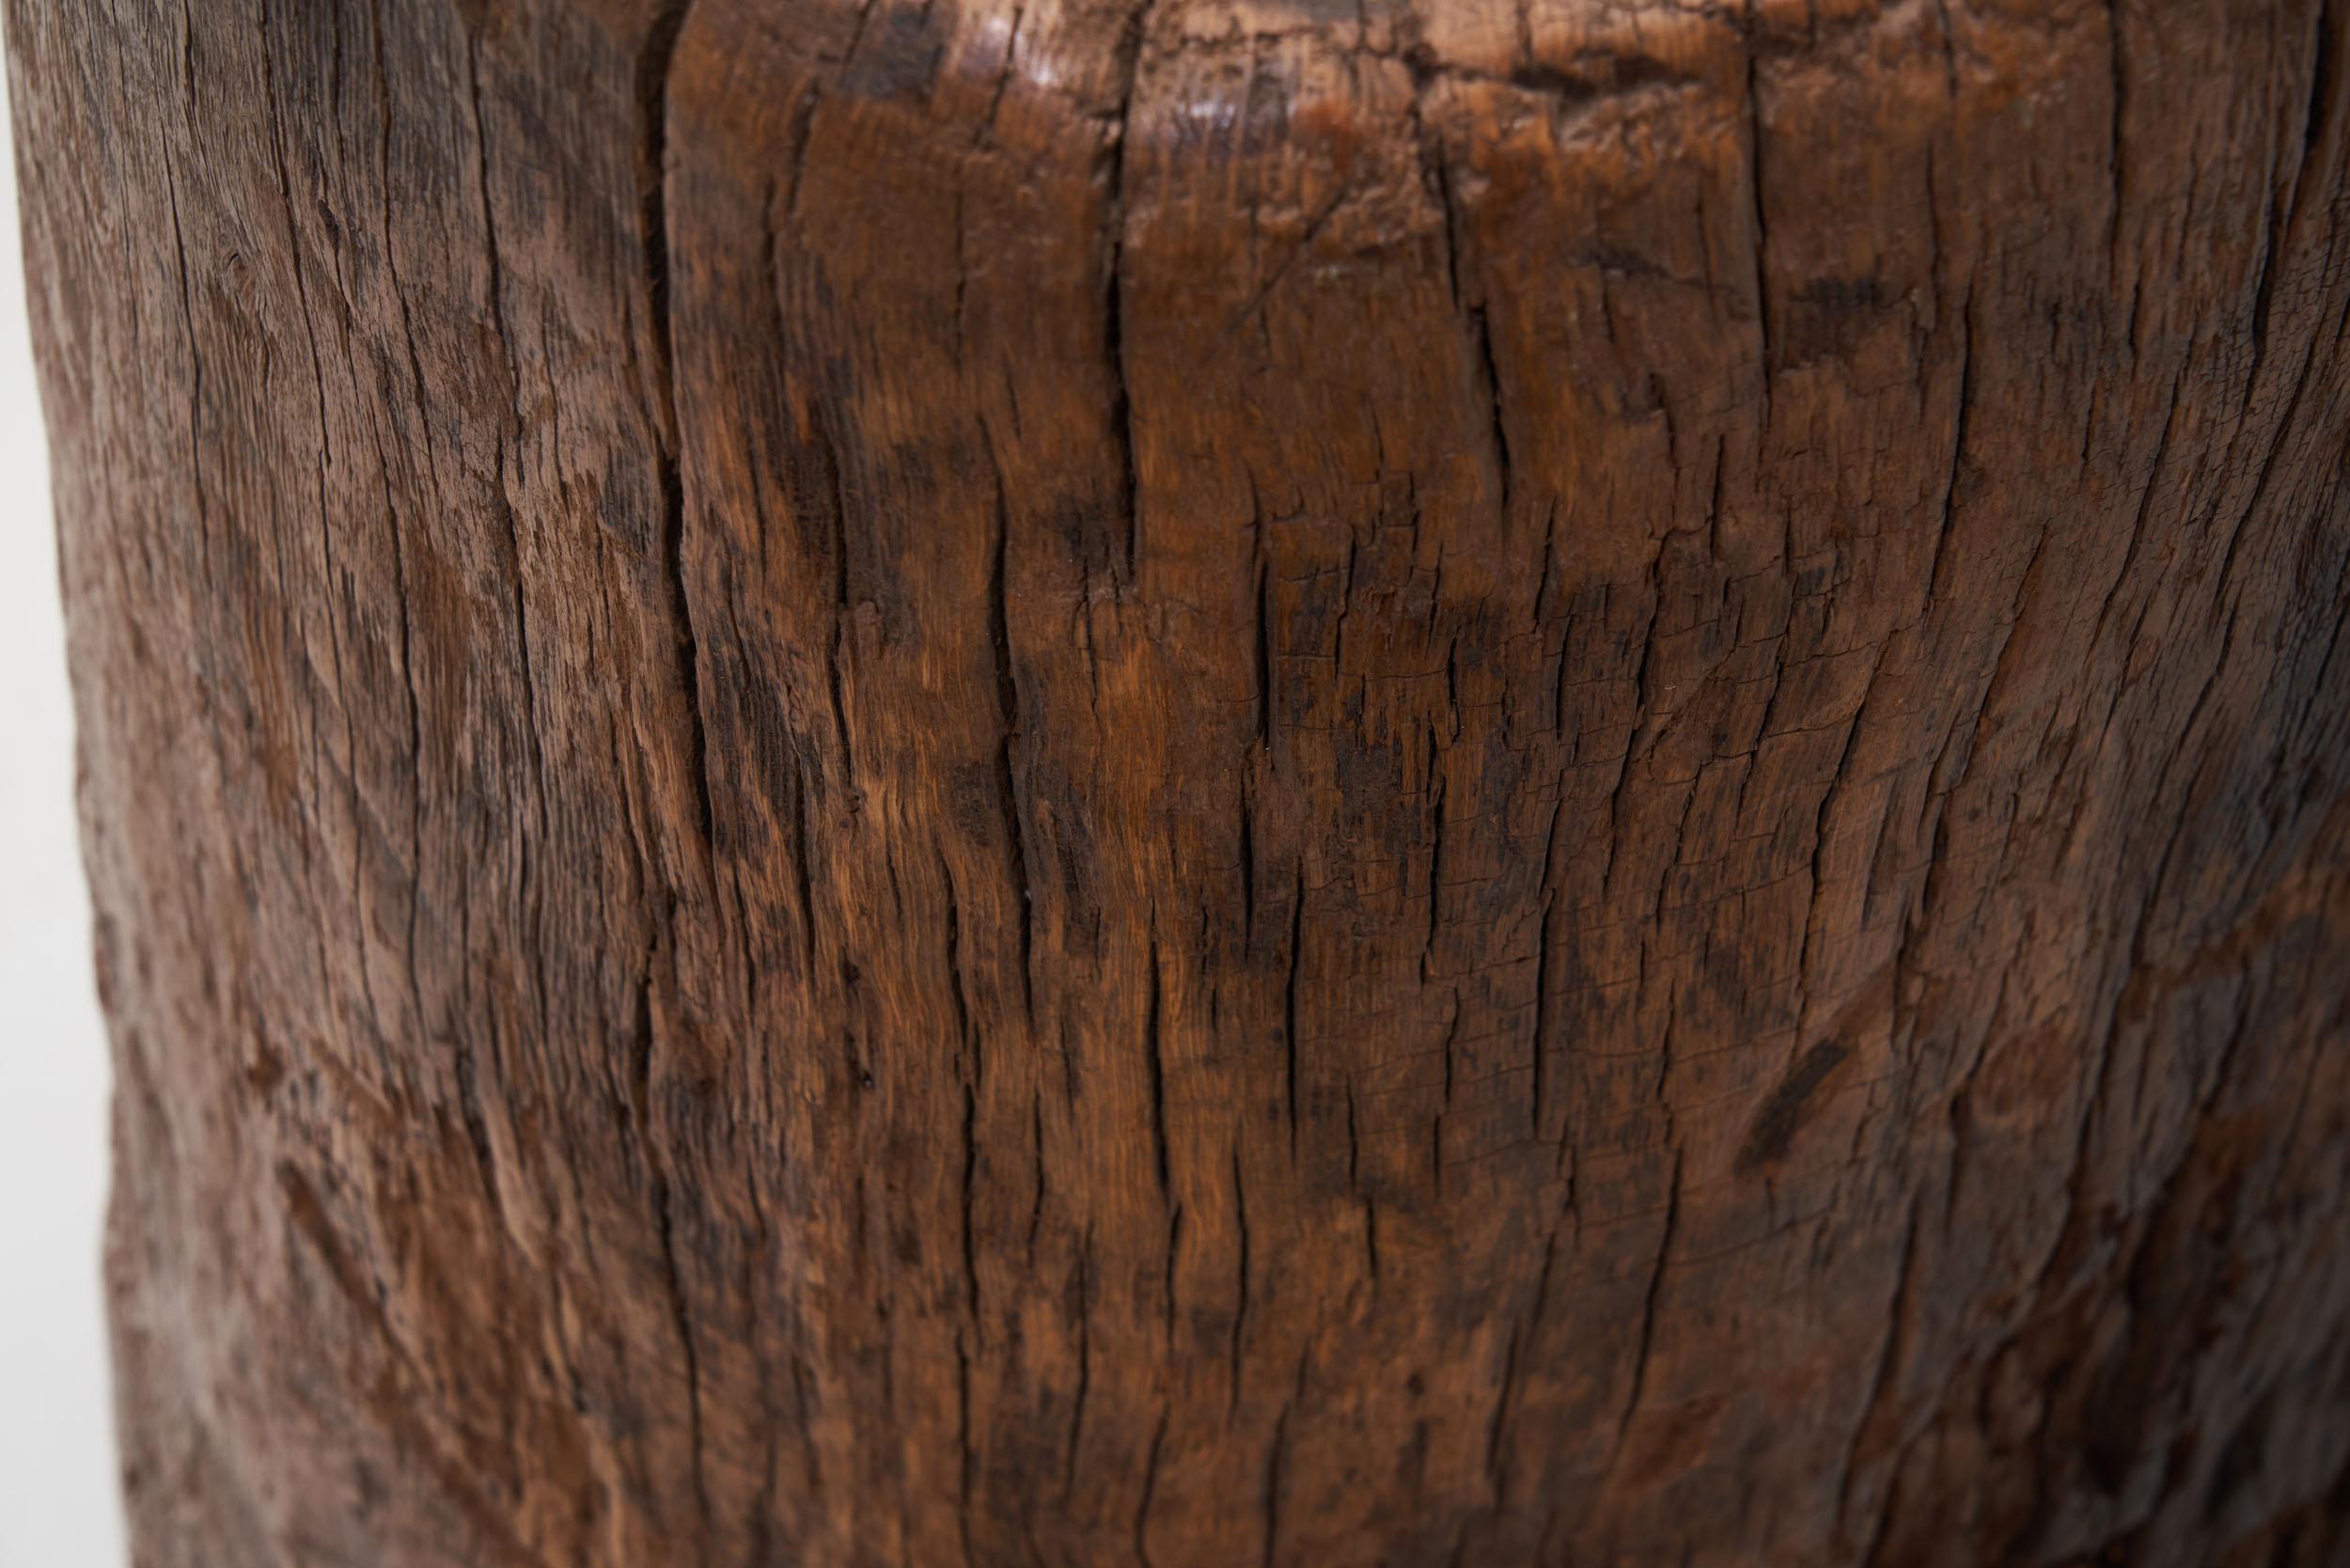 Tibetan Carved Wood “Tête a Tête” Love Seat, Tibet 19th Century For Sale 11